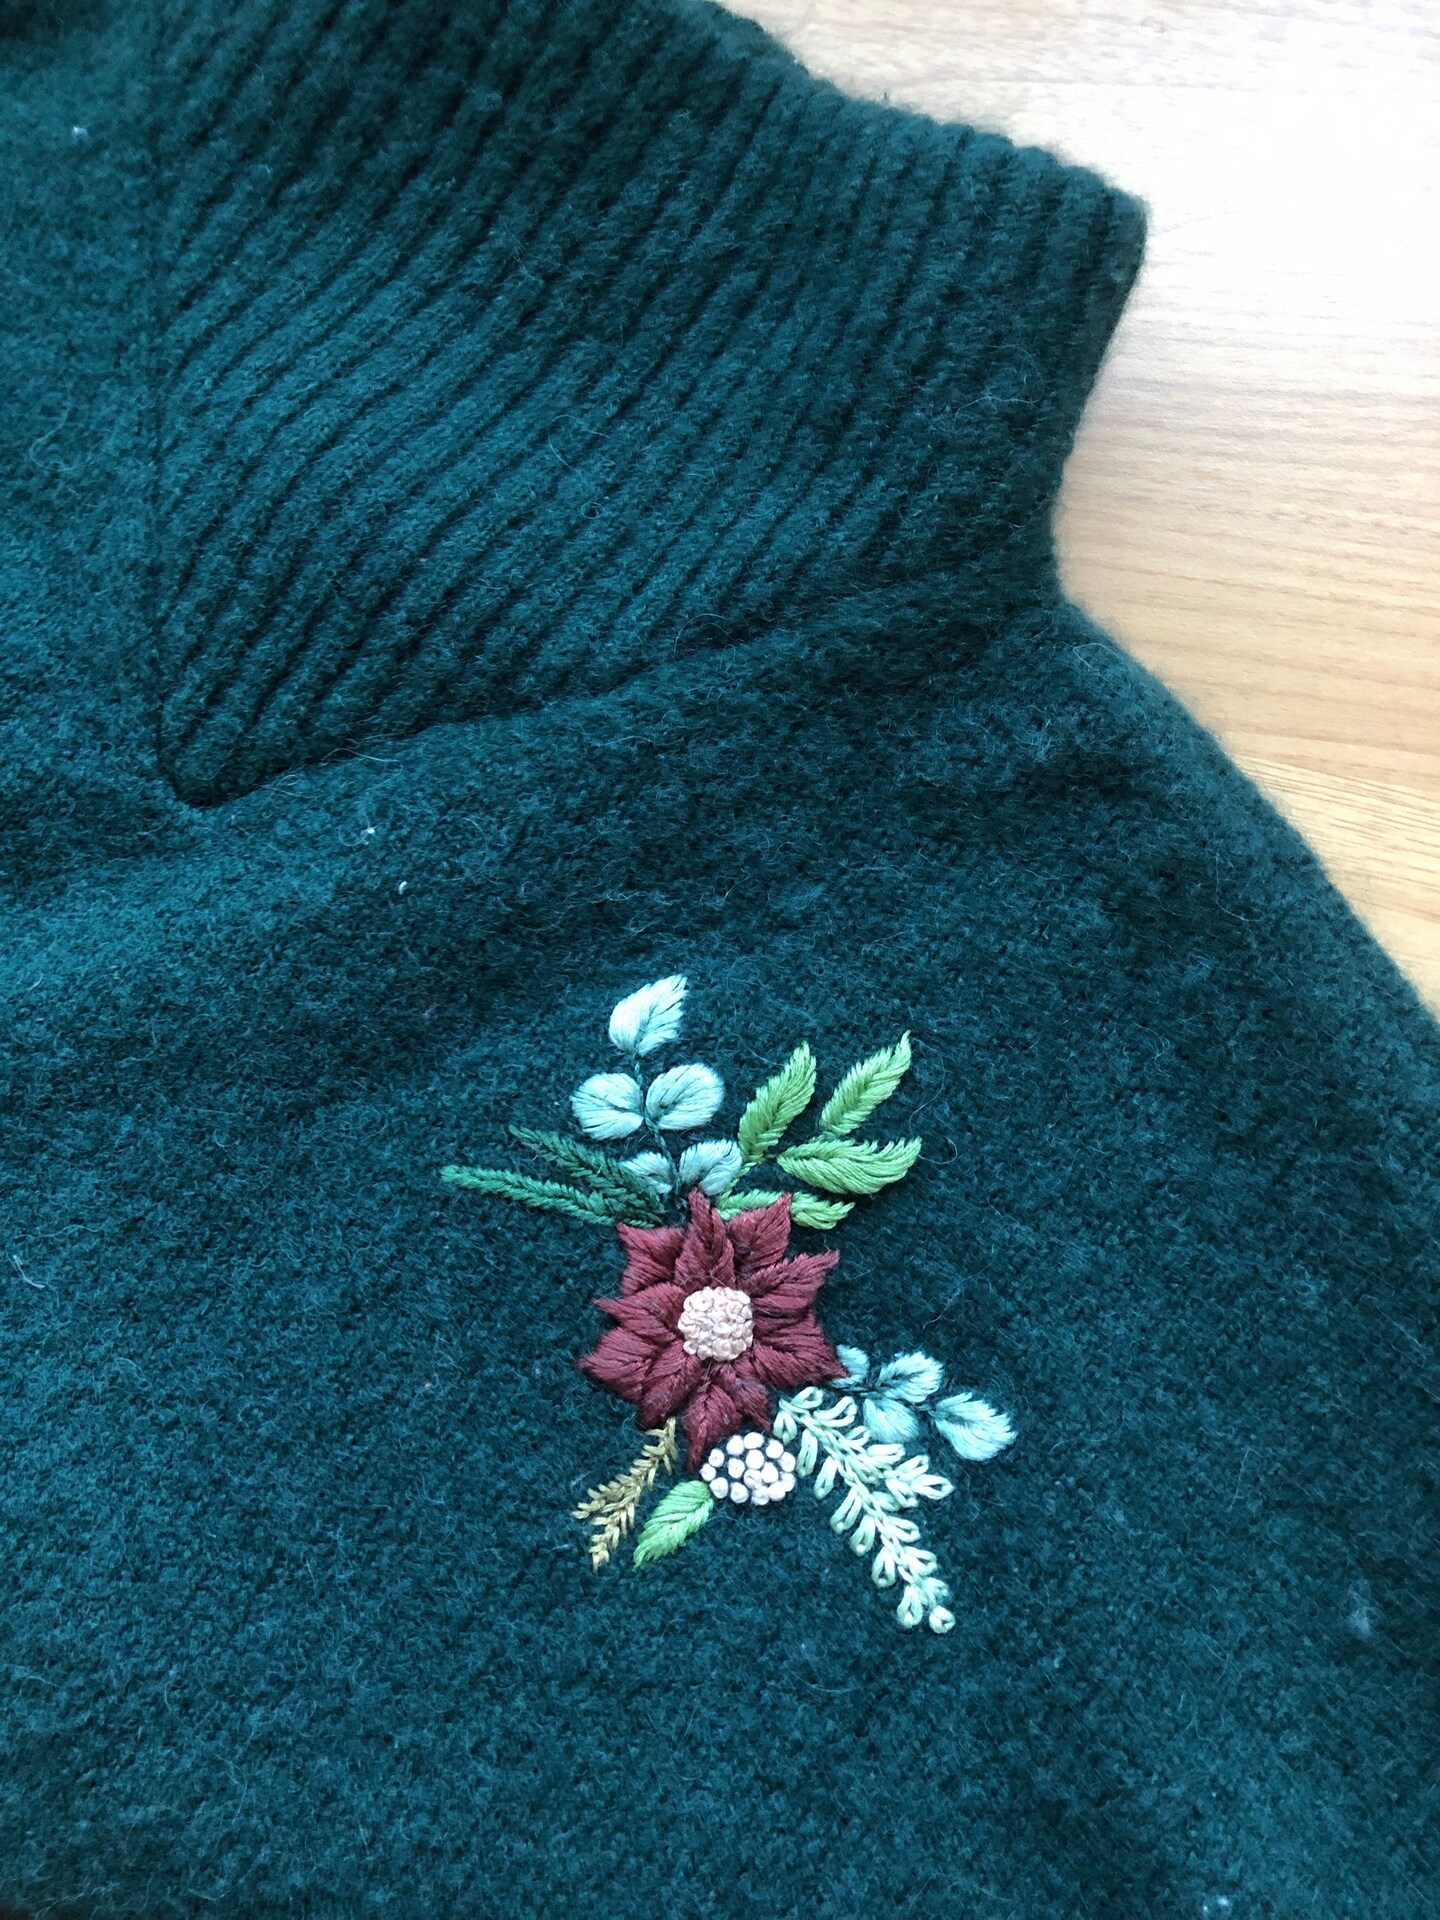 Botanicals: Botanical Embroidery Patterns (iron-on transfers